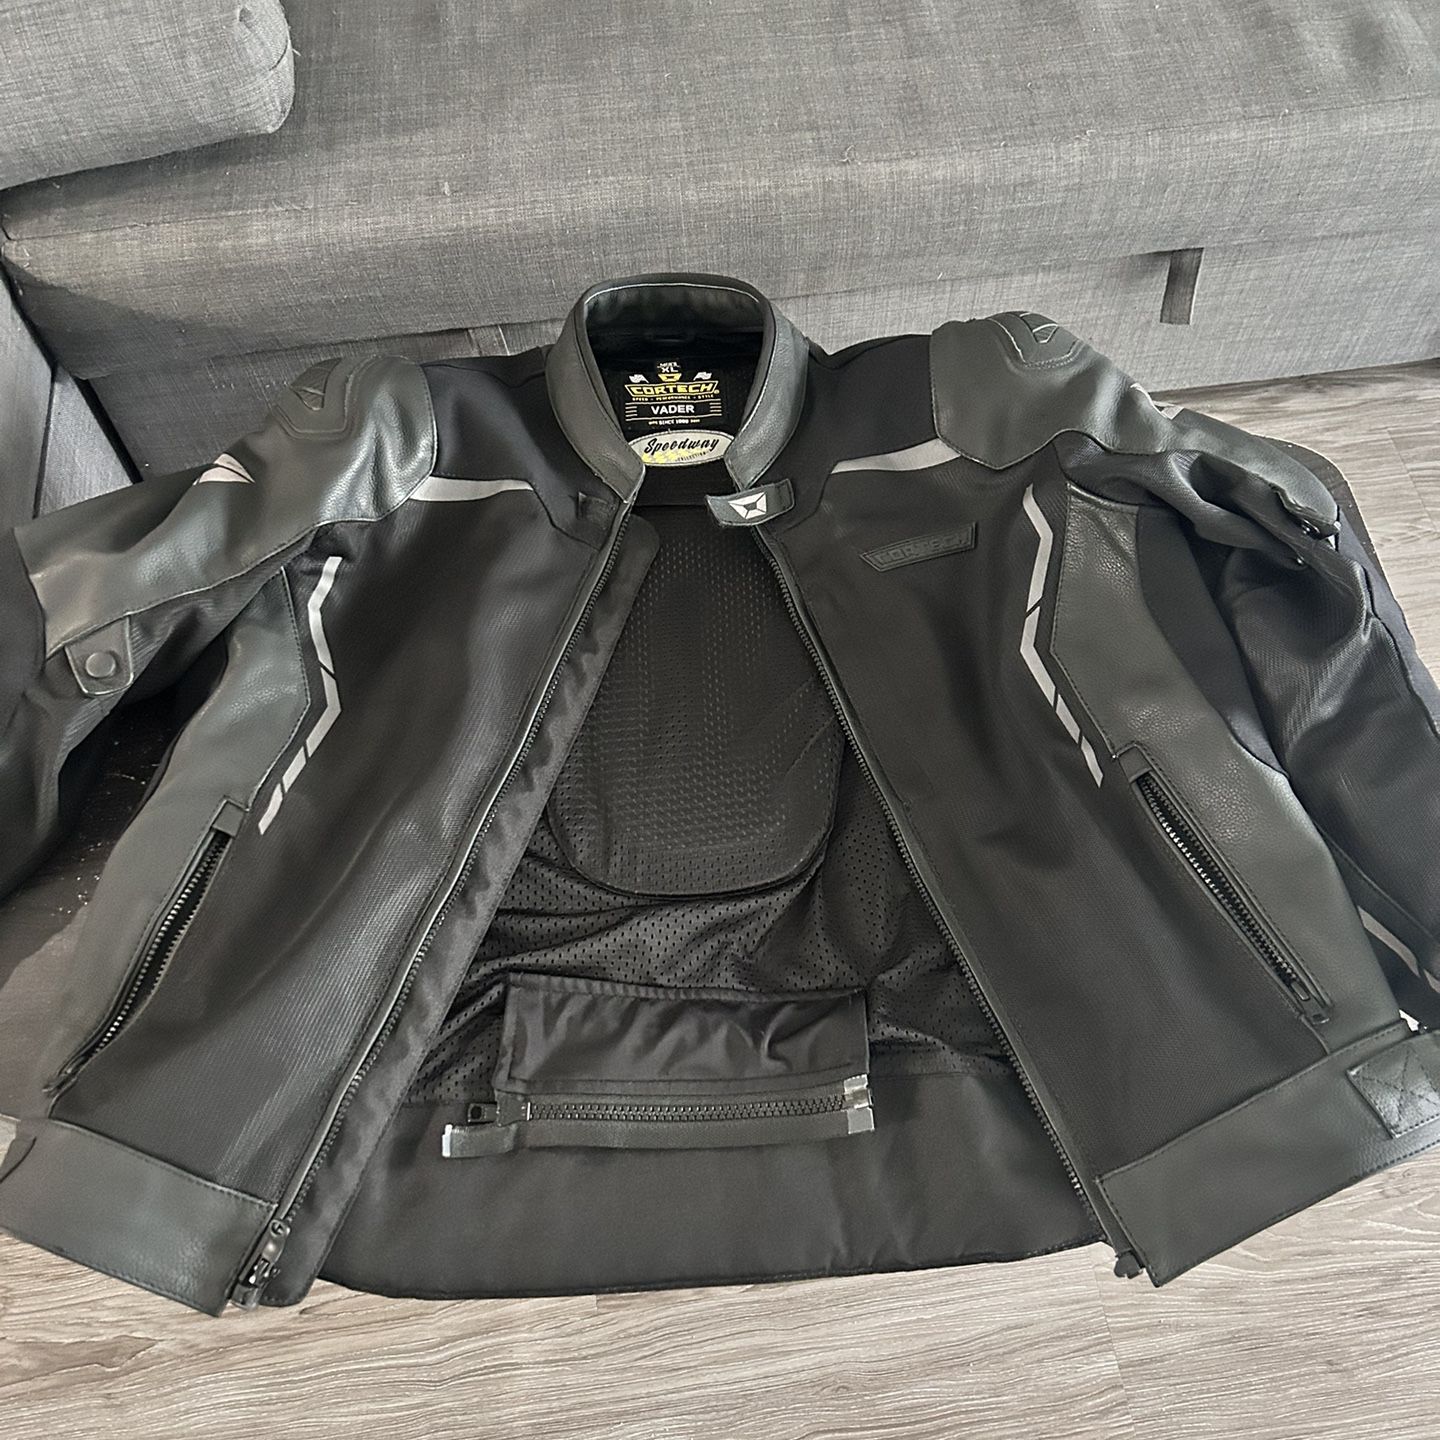 Vader Cortech motorcycle jacket